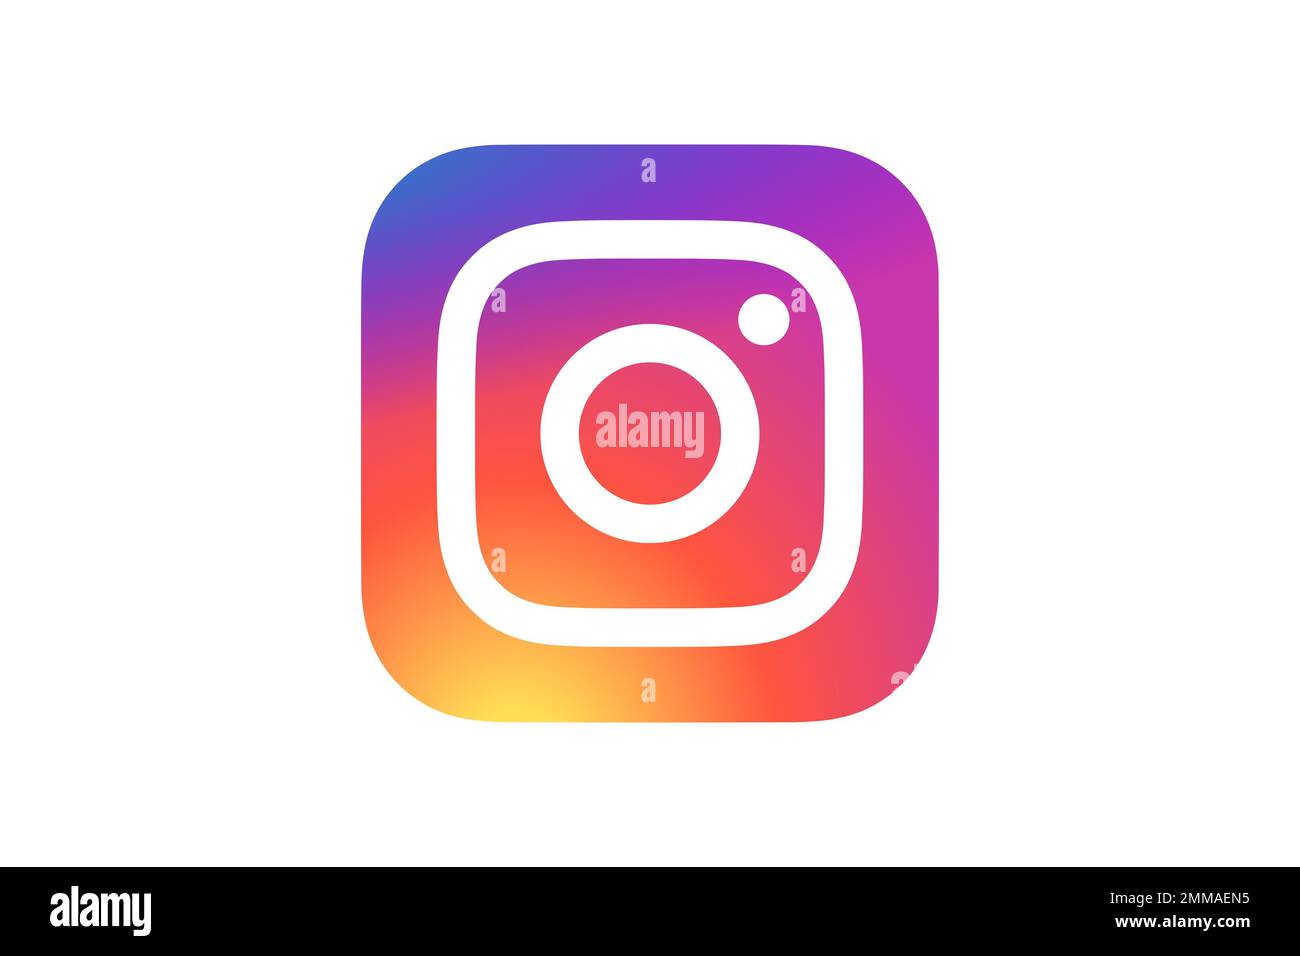 Instagram, White background, Logo, Brand name Stock Photo - Alamy